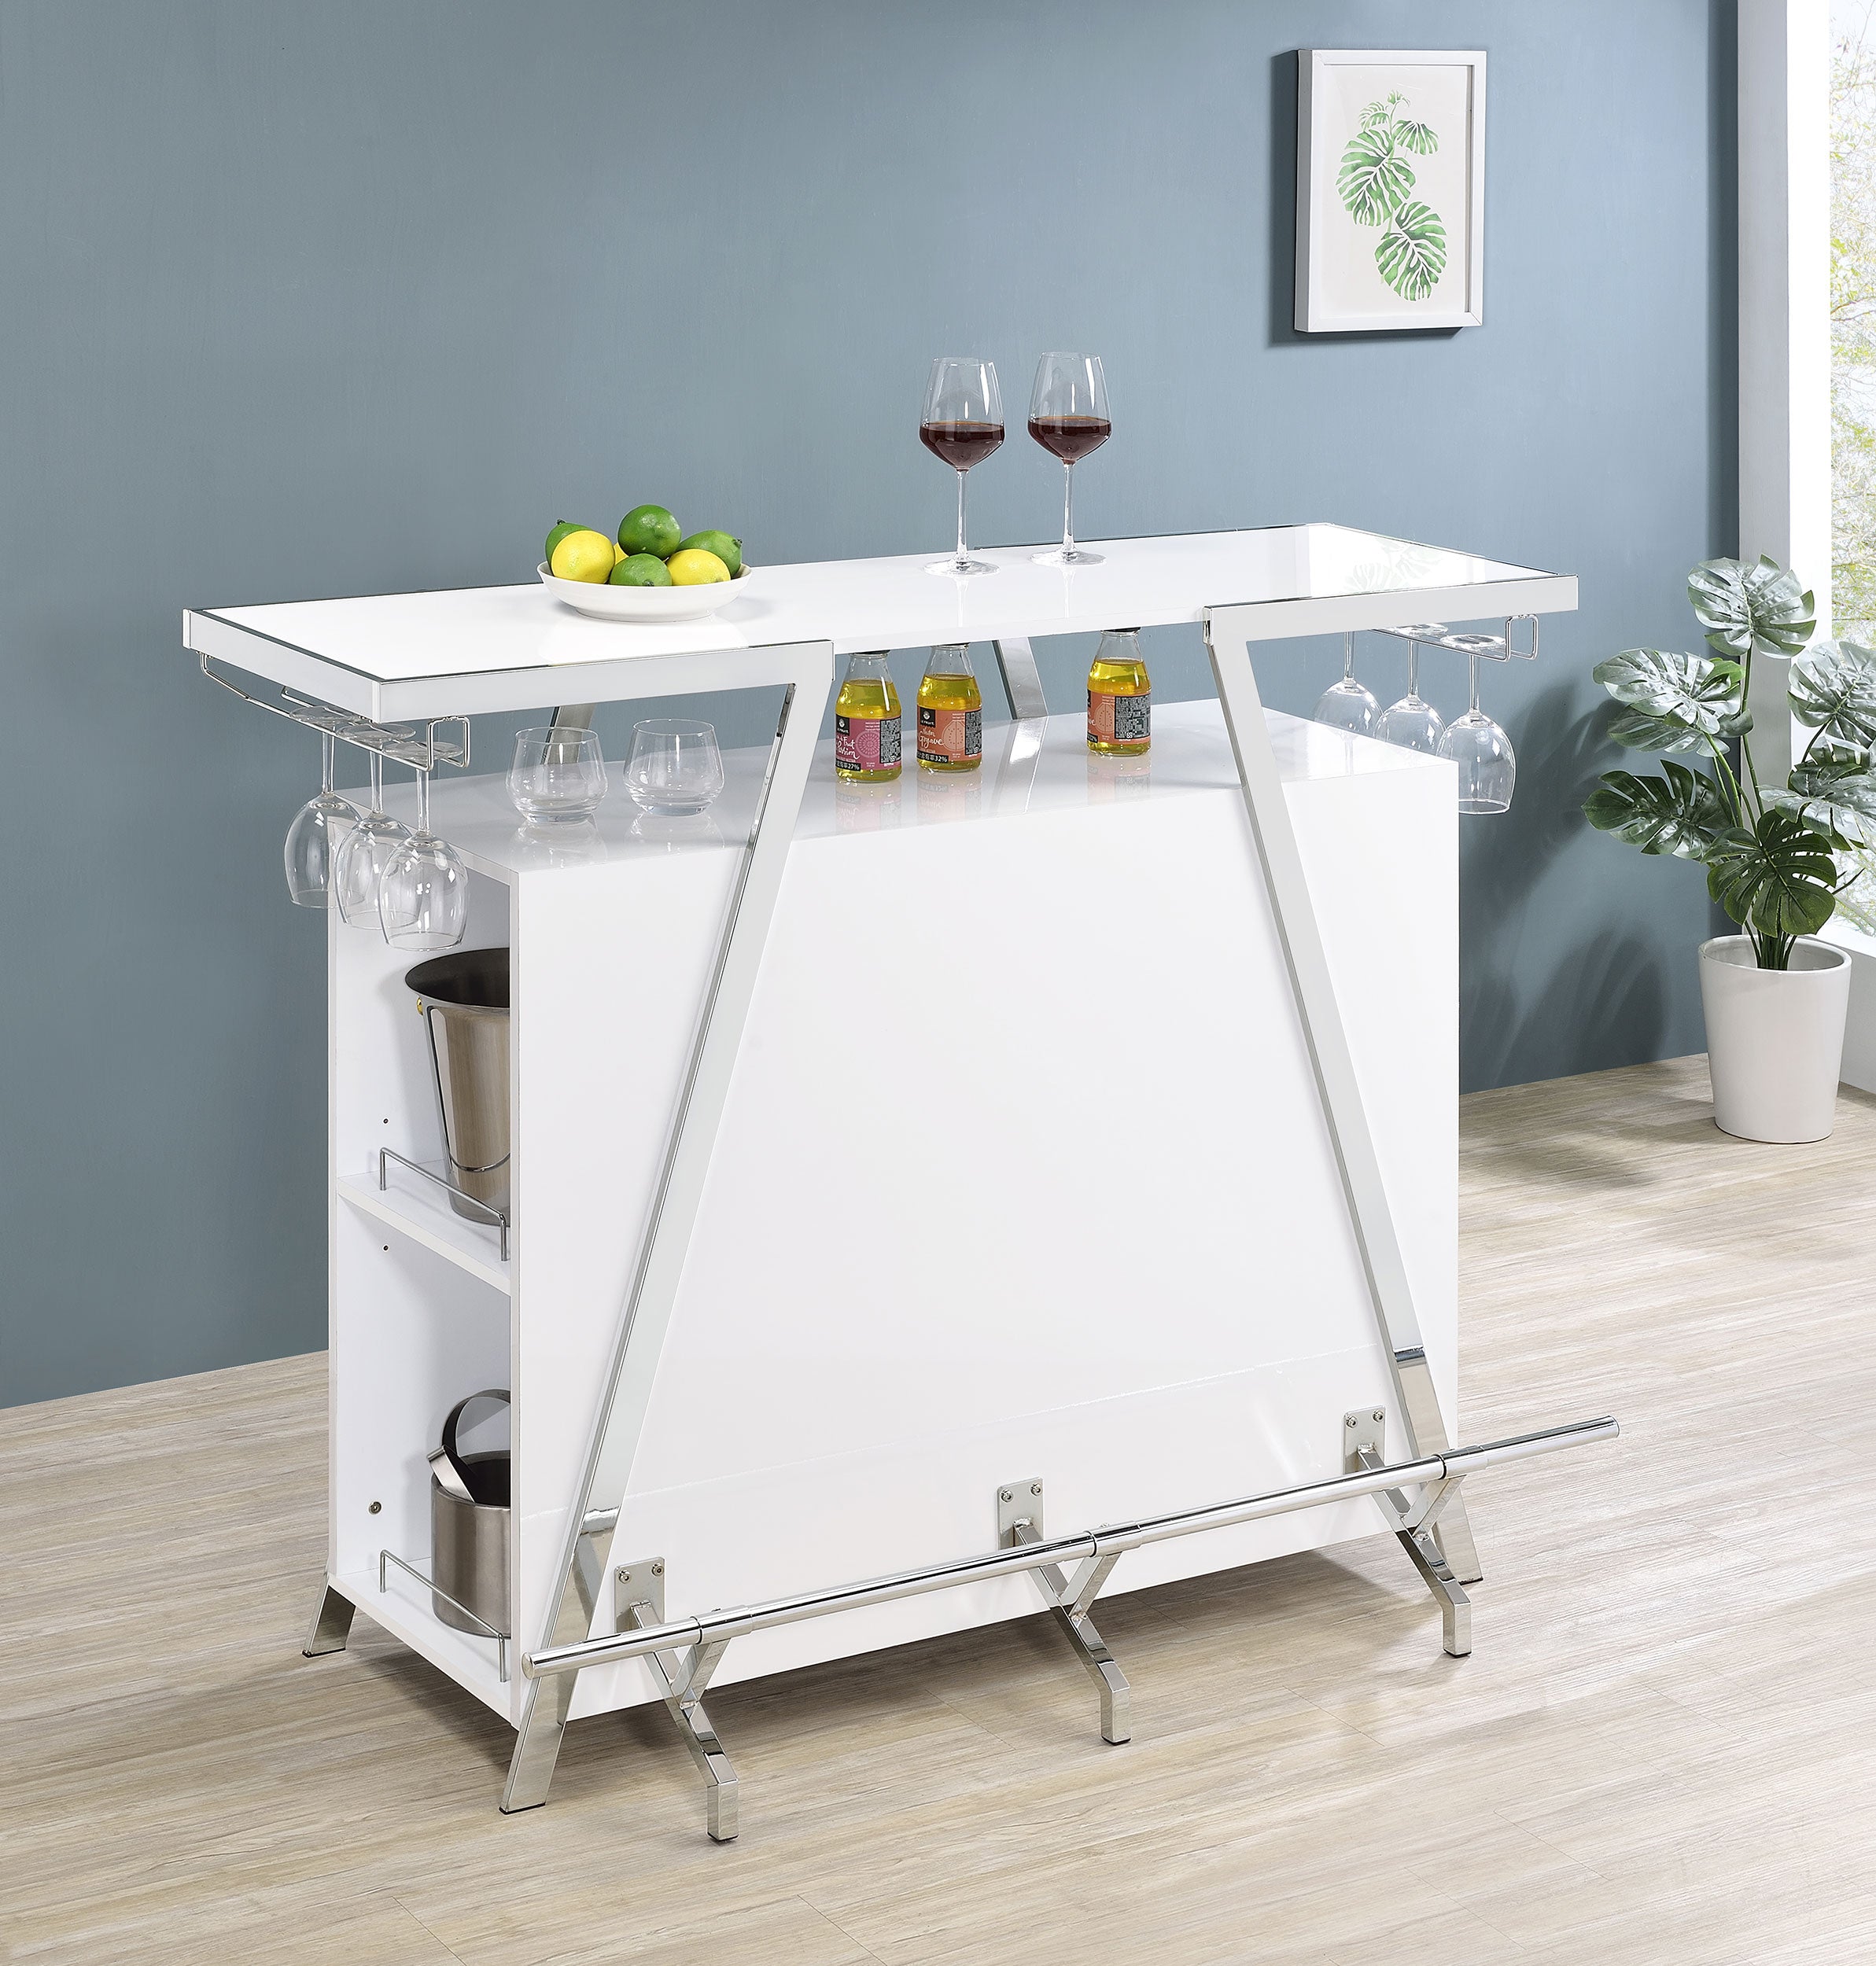 Araceli Home Bar Wine Cabinet White High Gloss and Chrome